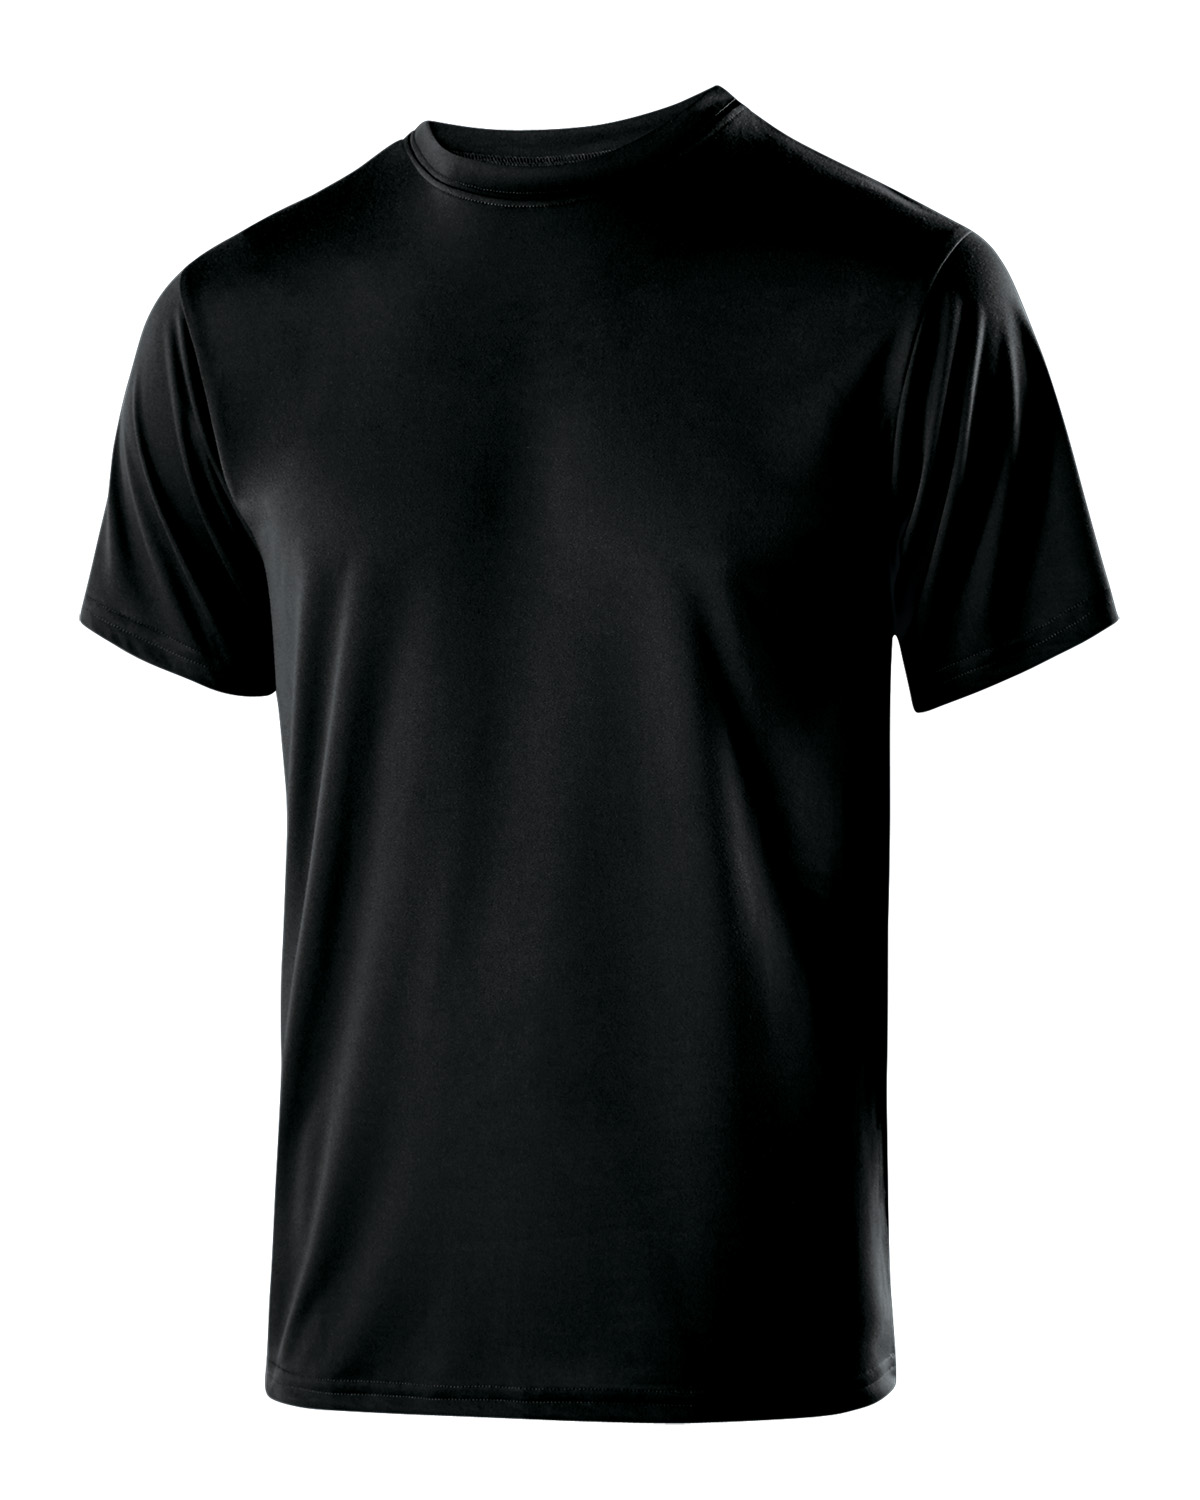 Holloway 222523 - Adult Polyester Short Sleeve Gauge Shirt